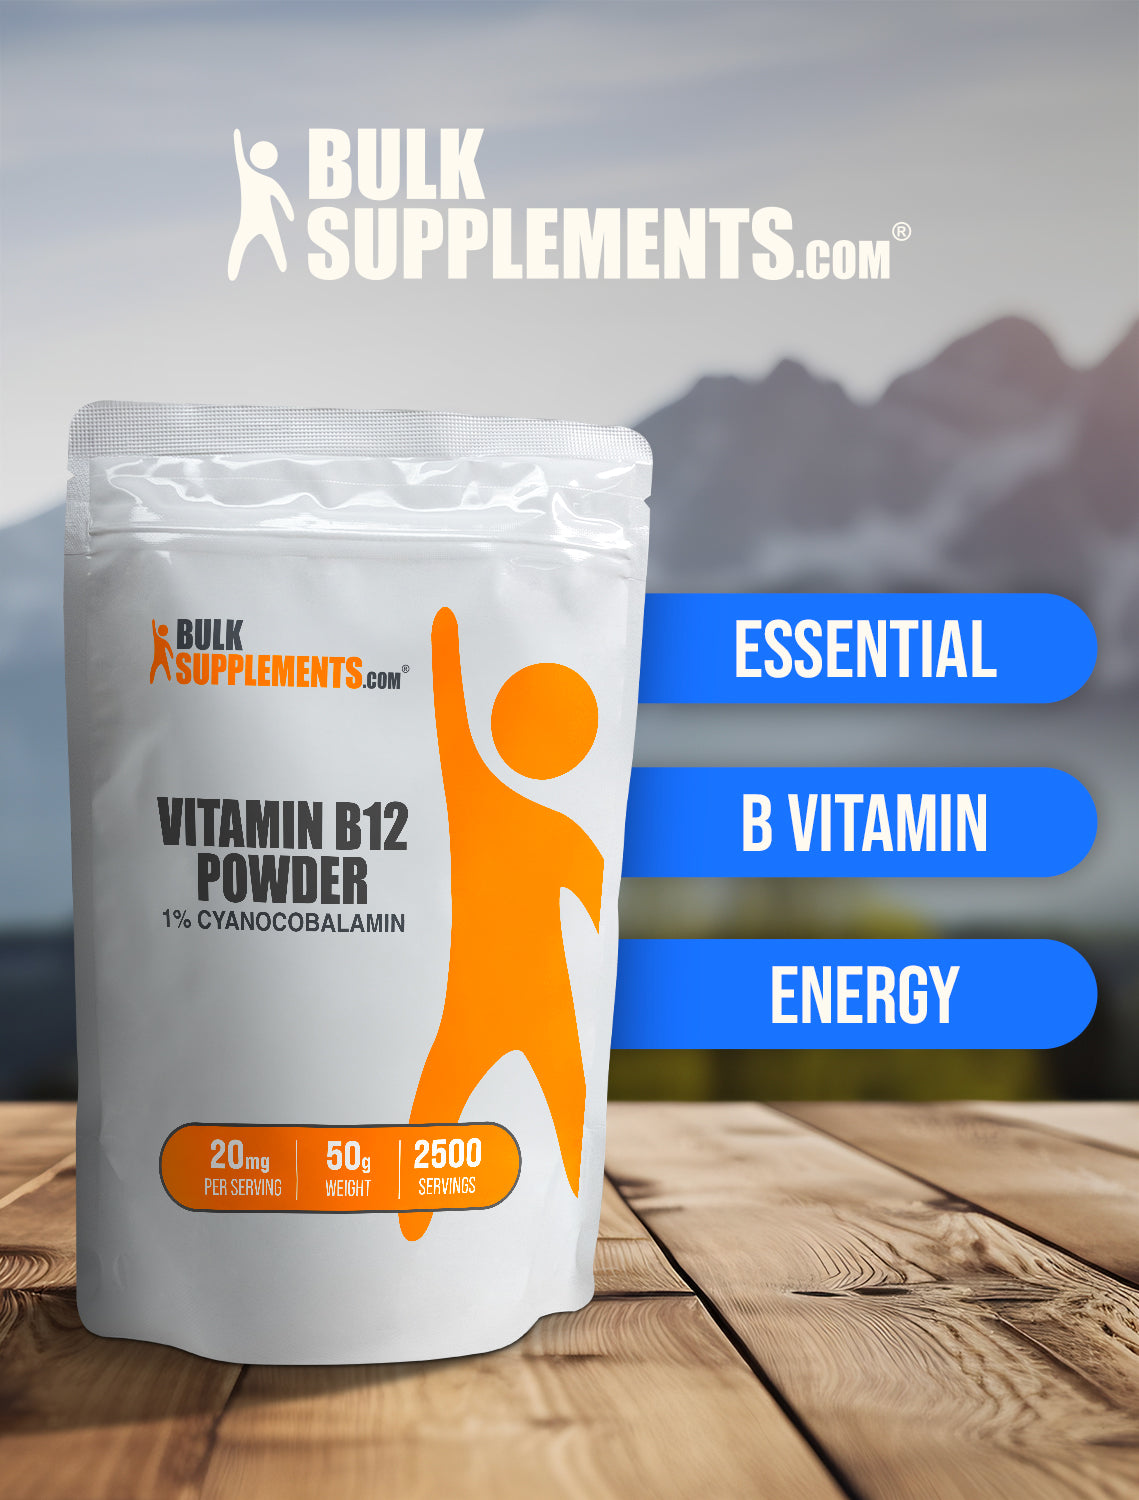 Vitamin B12 1% Cyanocobalamin powder keyword image 250g